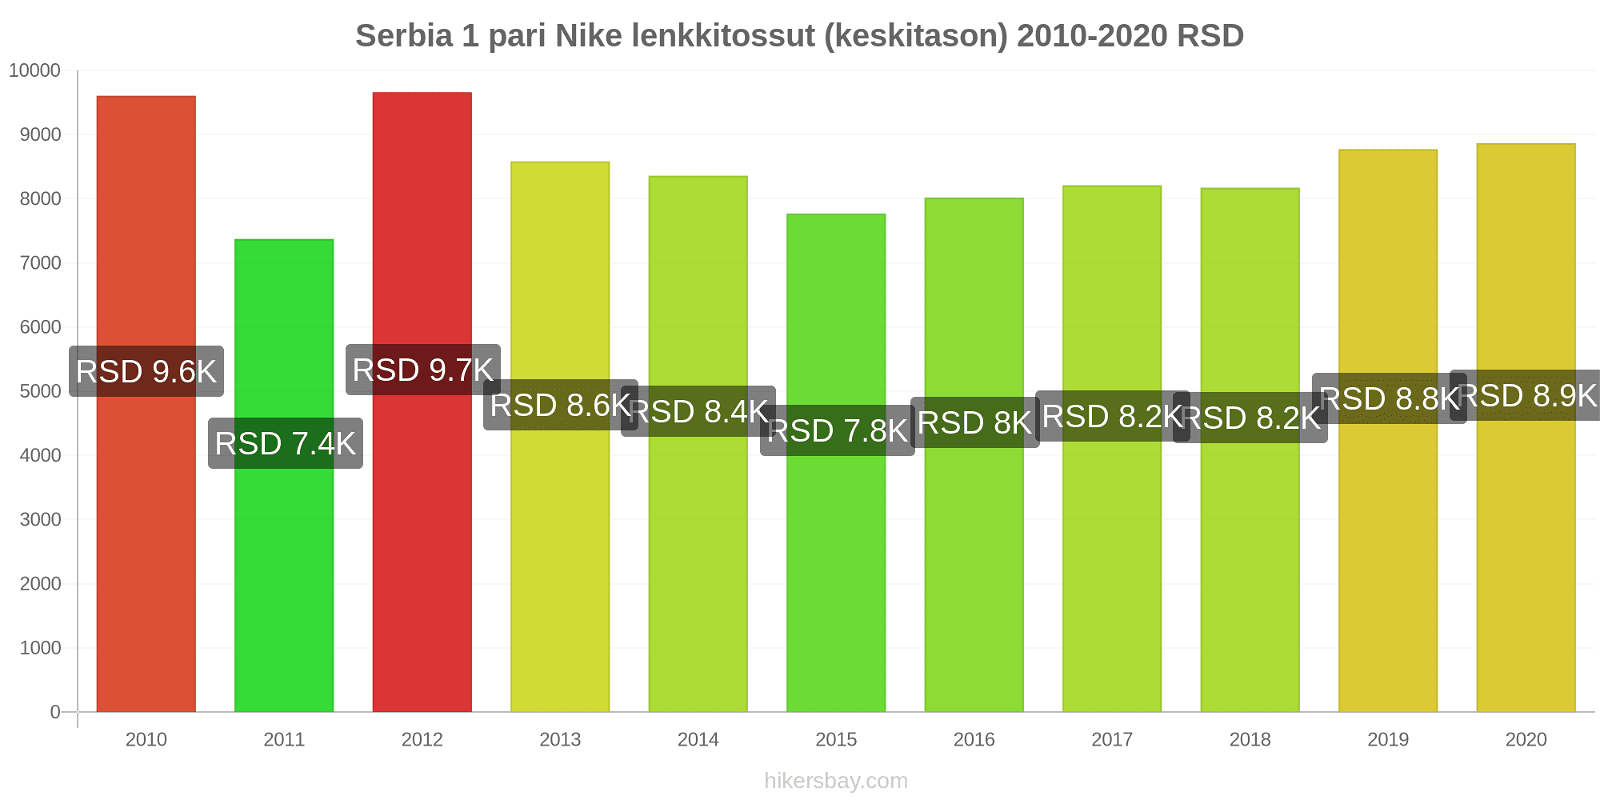 Serbia hintojen muutokset 1 pari Nike lenkkitossut (keskitason) hikersbay.com